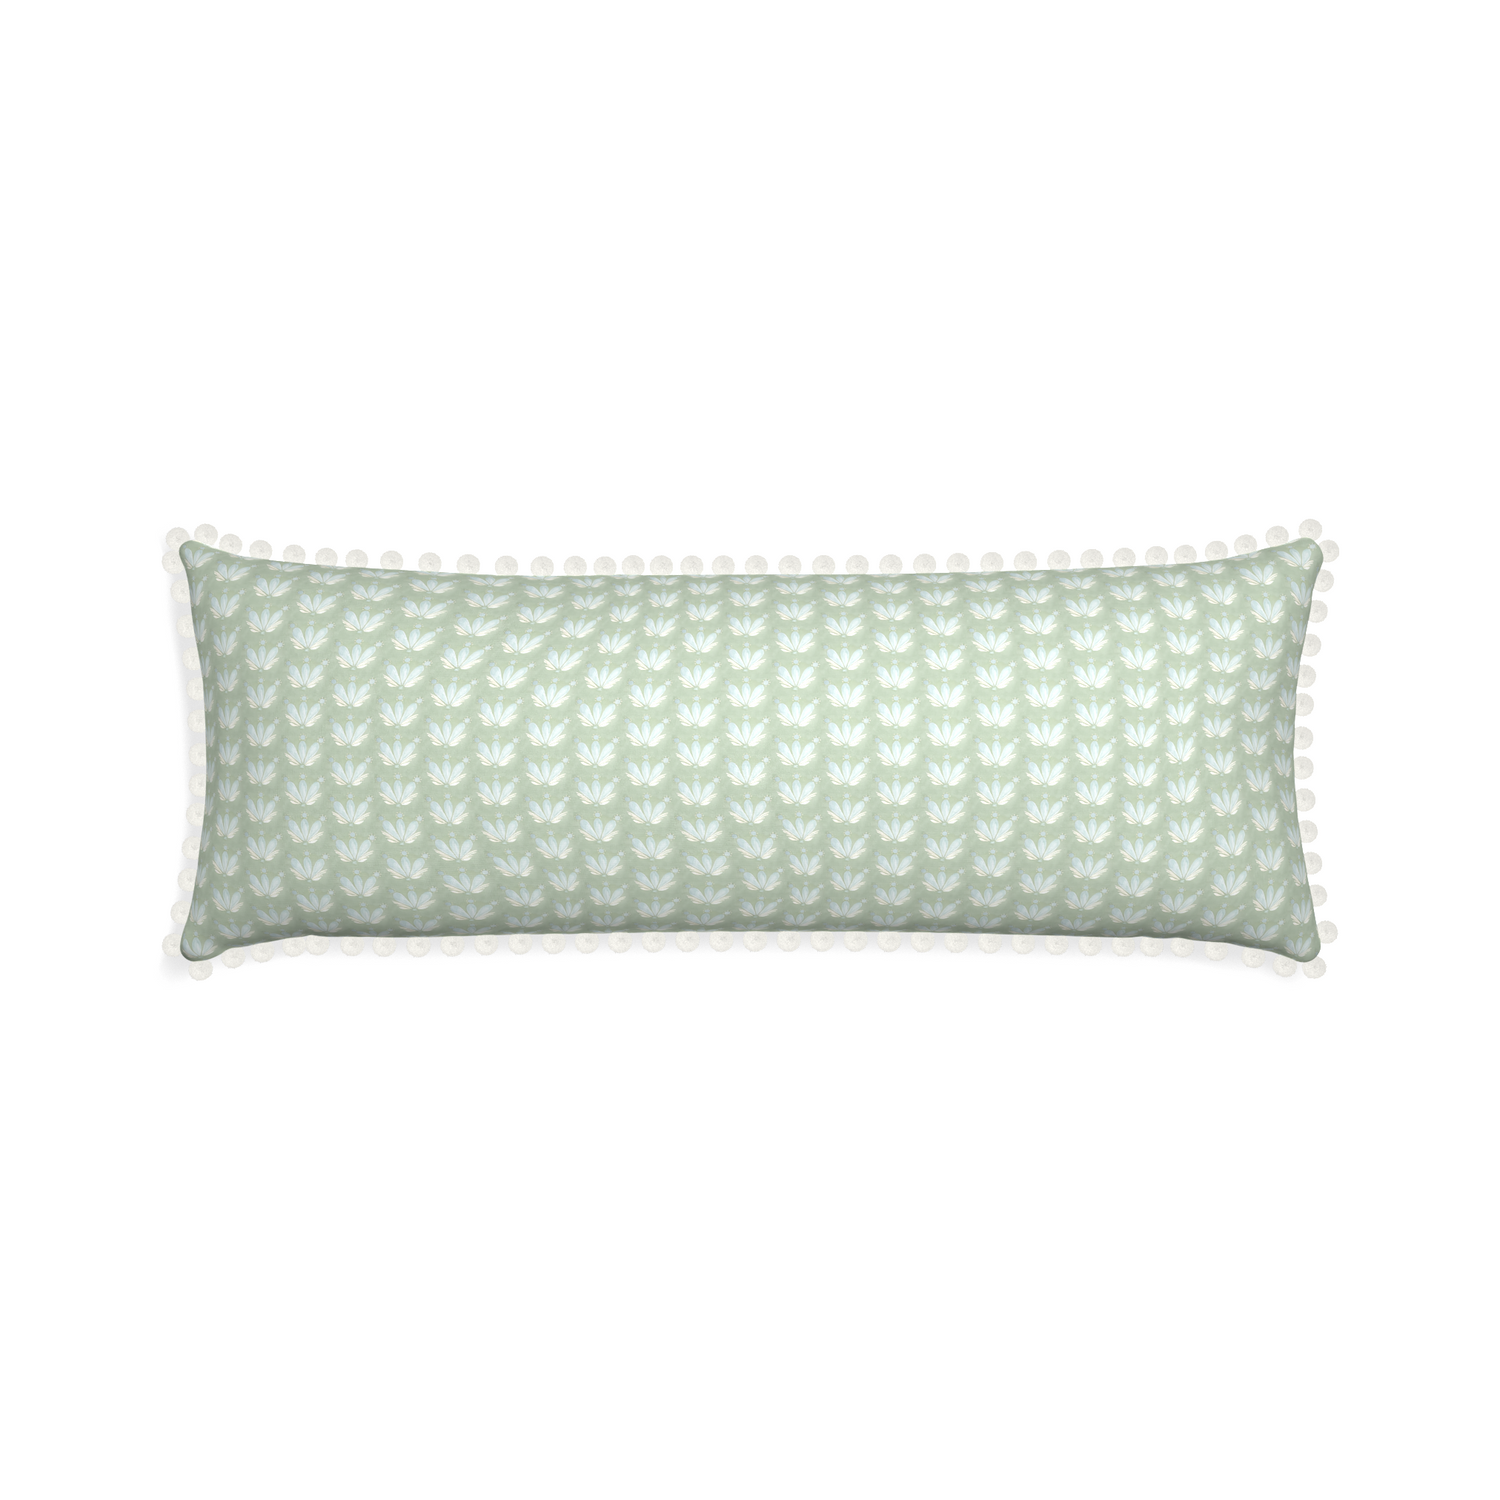 Xl-lumbar serena sea salt custom pillow with snow pom pom on white background